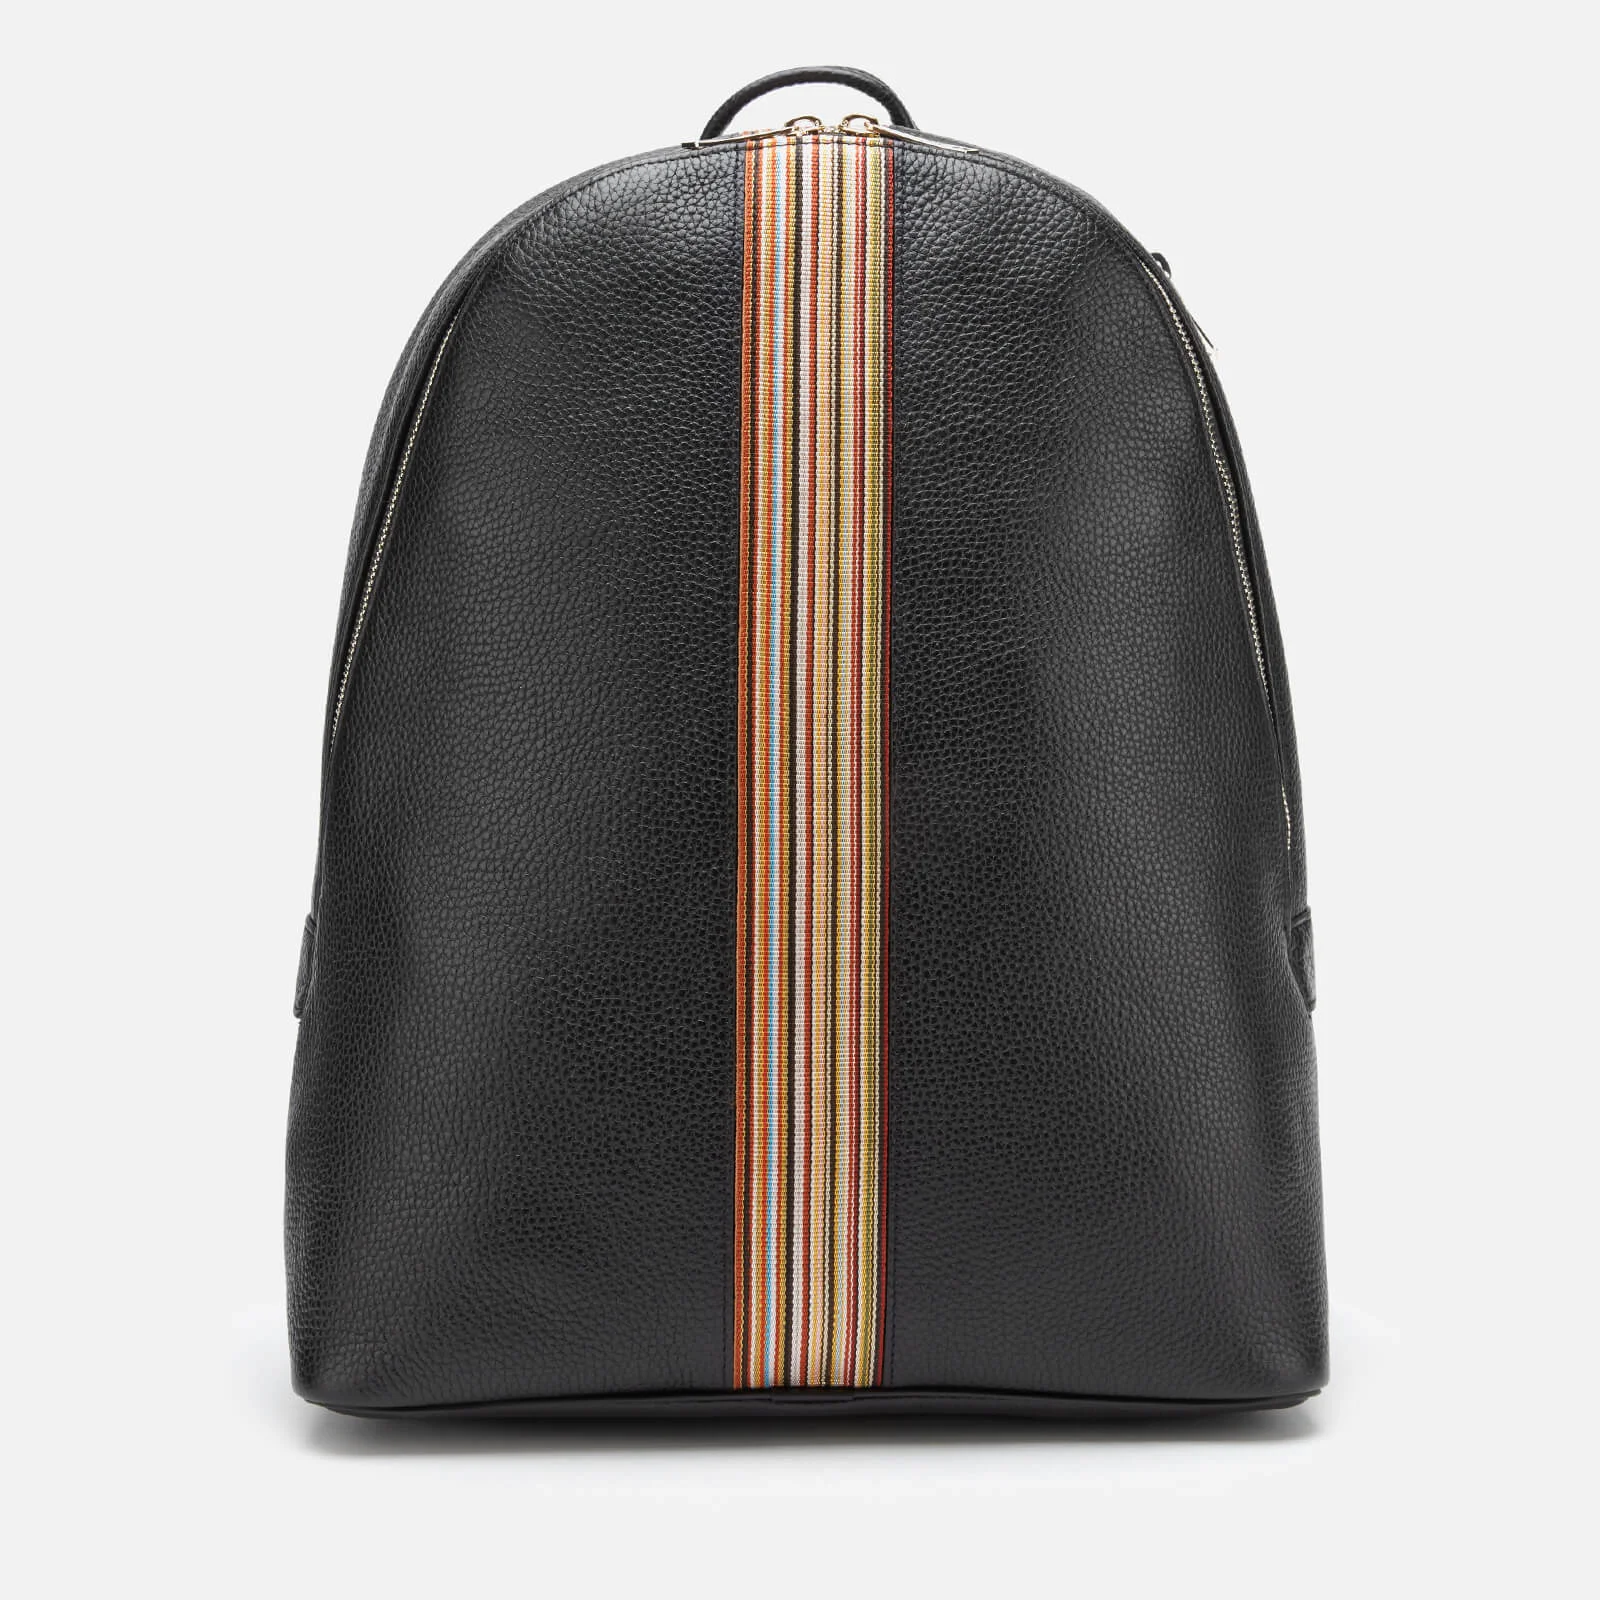 PS Paul Smith Men's Signature Stripe Backpack - Black Pebble Image 1